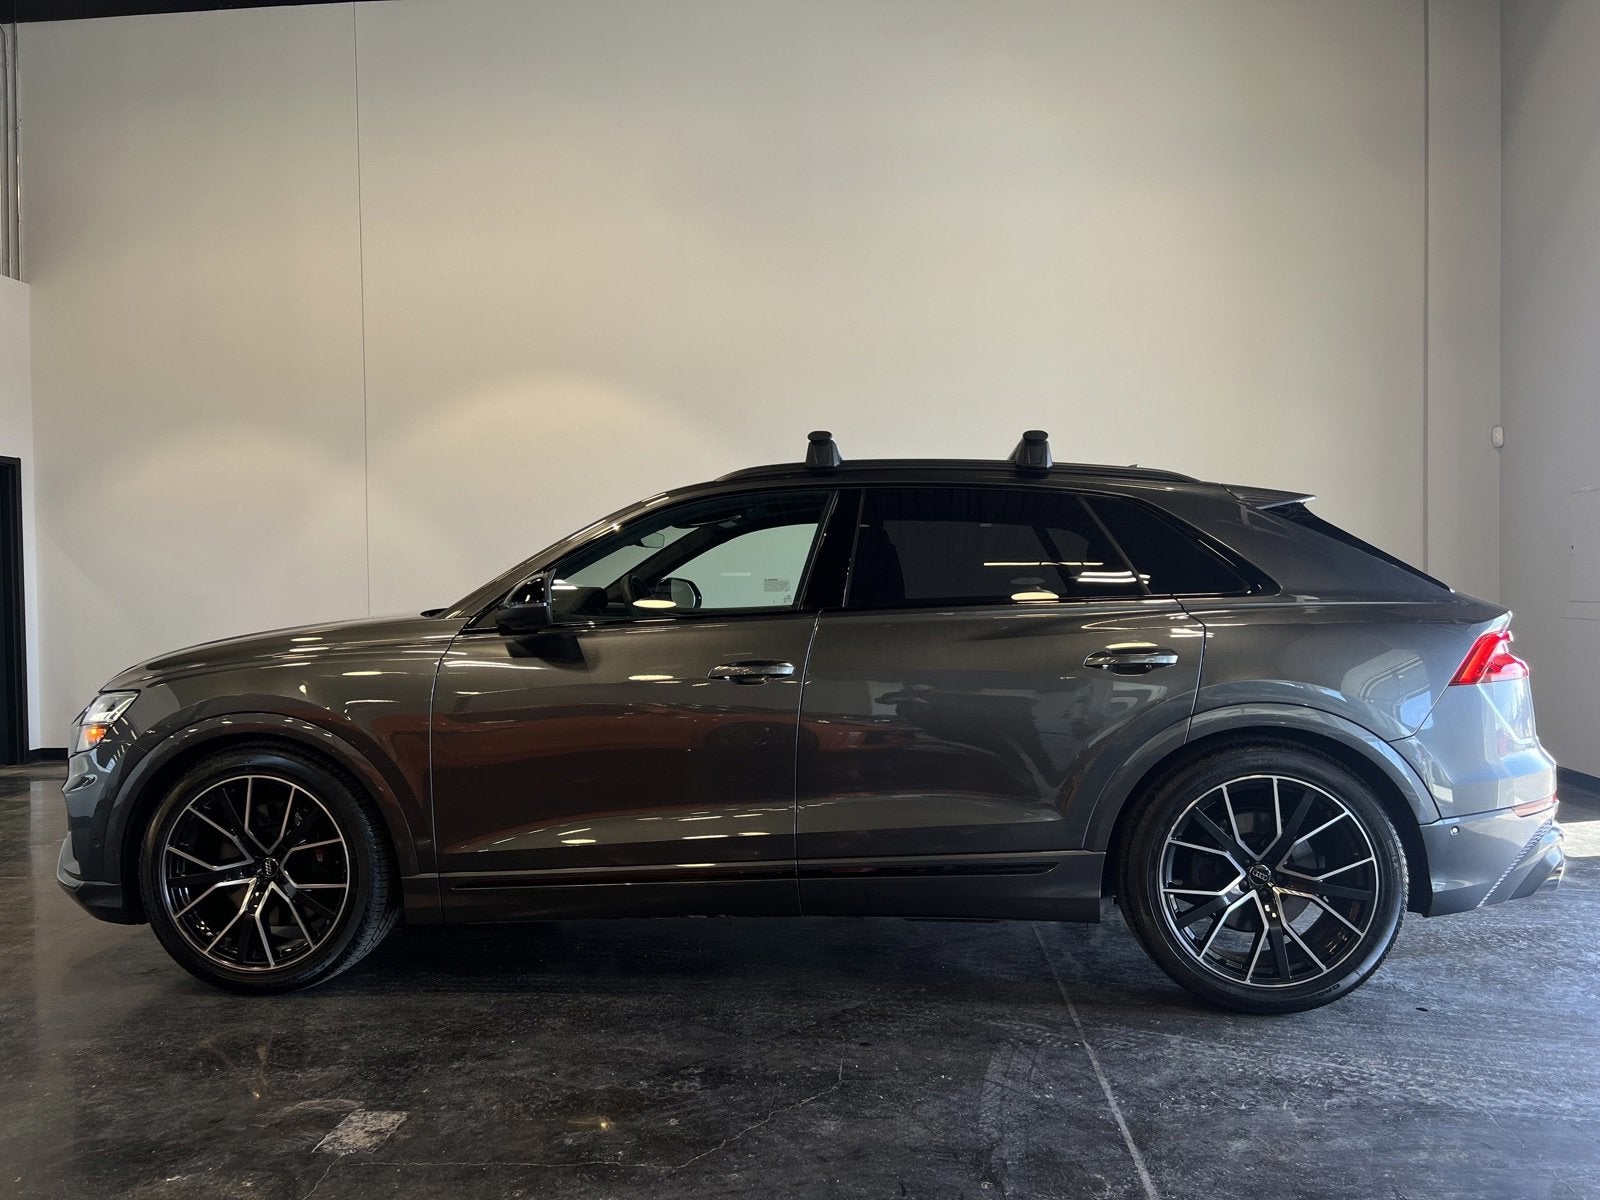 2020 Audi SQ8 Prestige